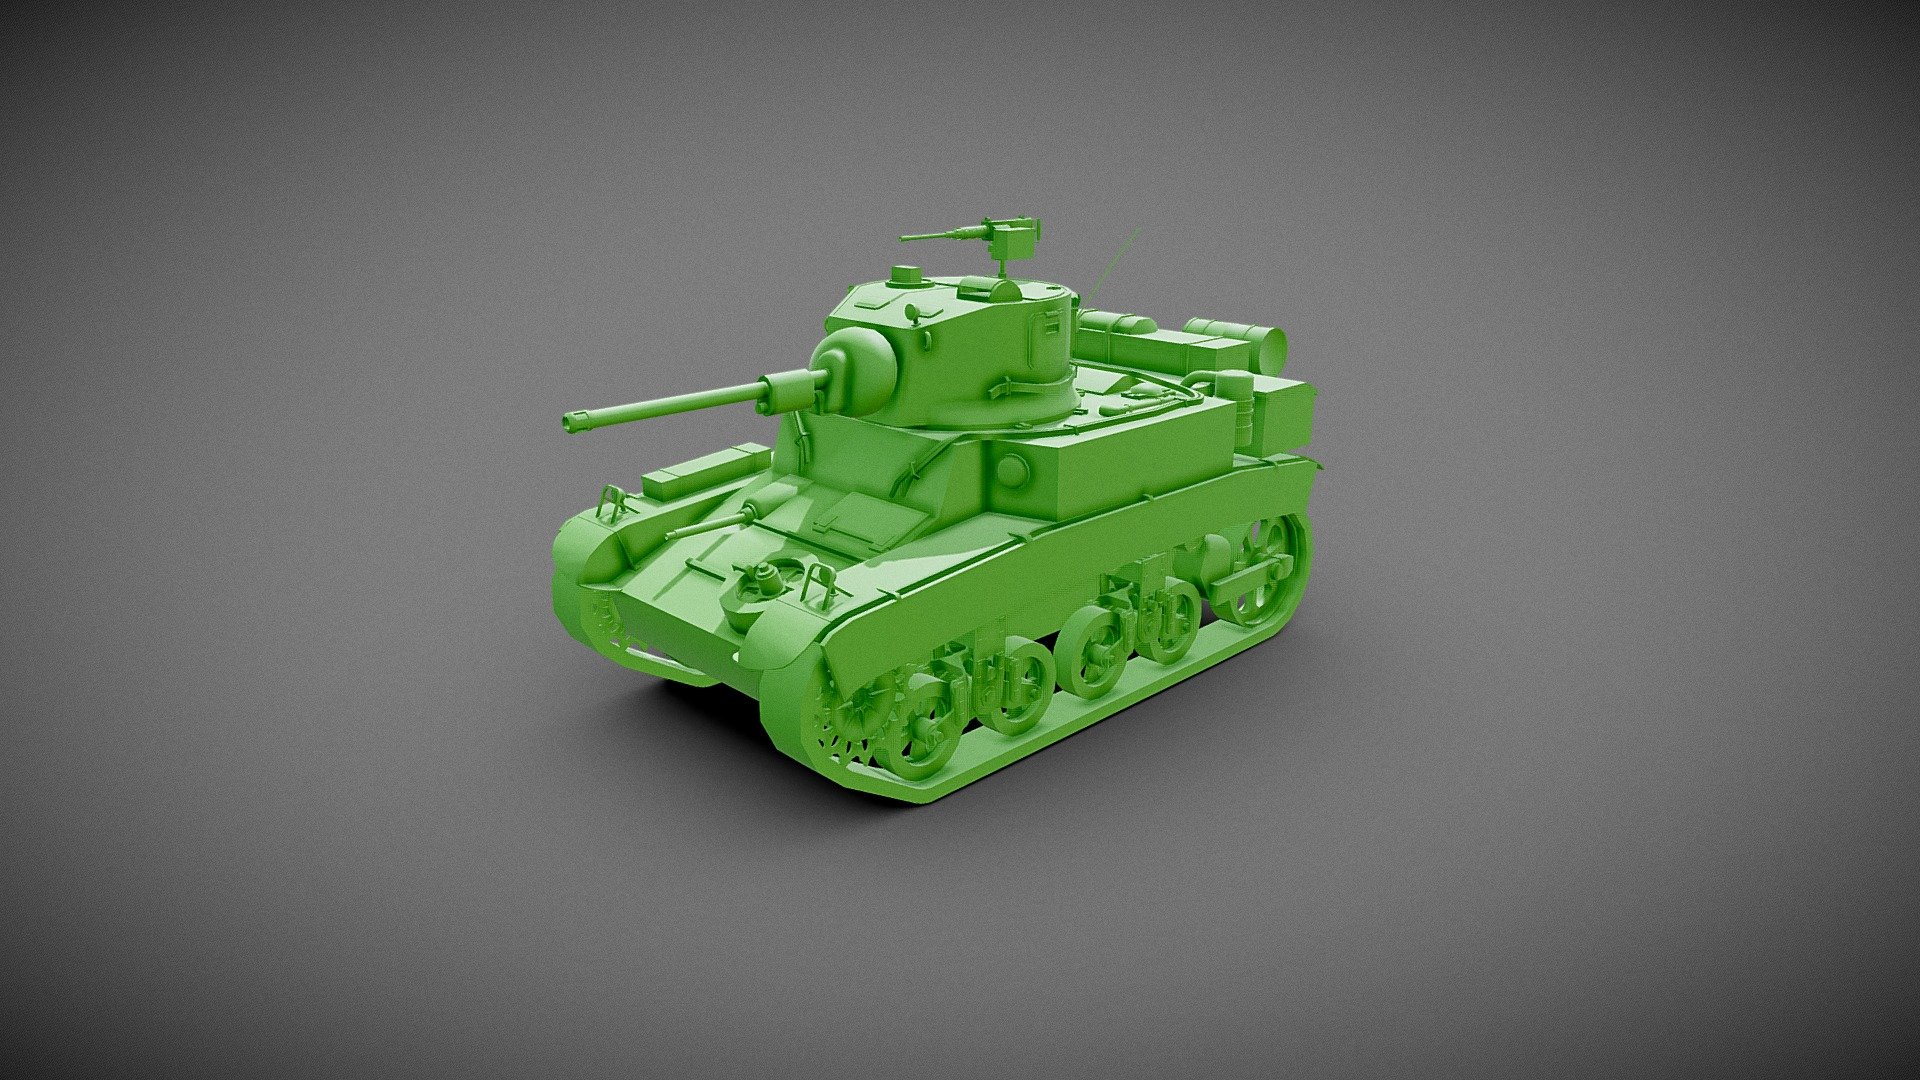 M3 Stuart Base Mesh V2

Another version of m3 stuart. Form more tank models please check my Tanks collection 3d model